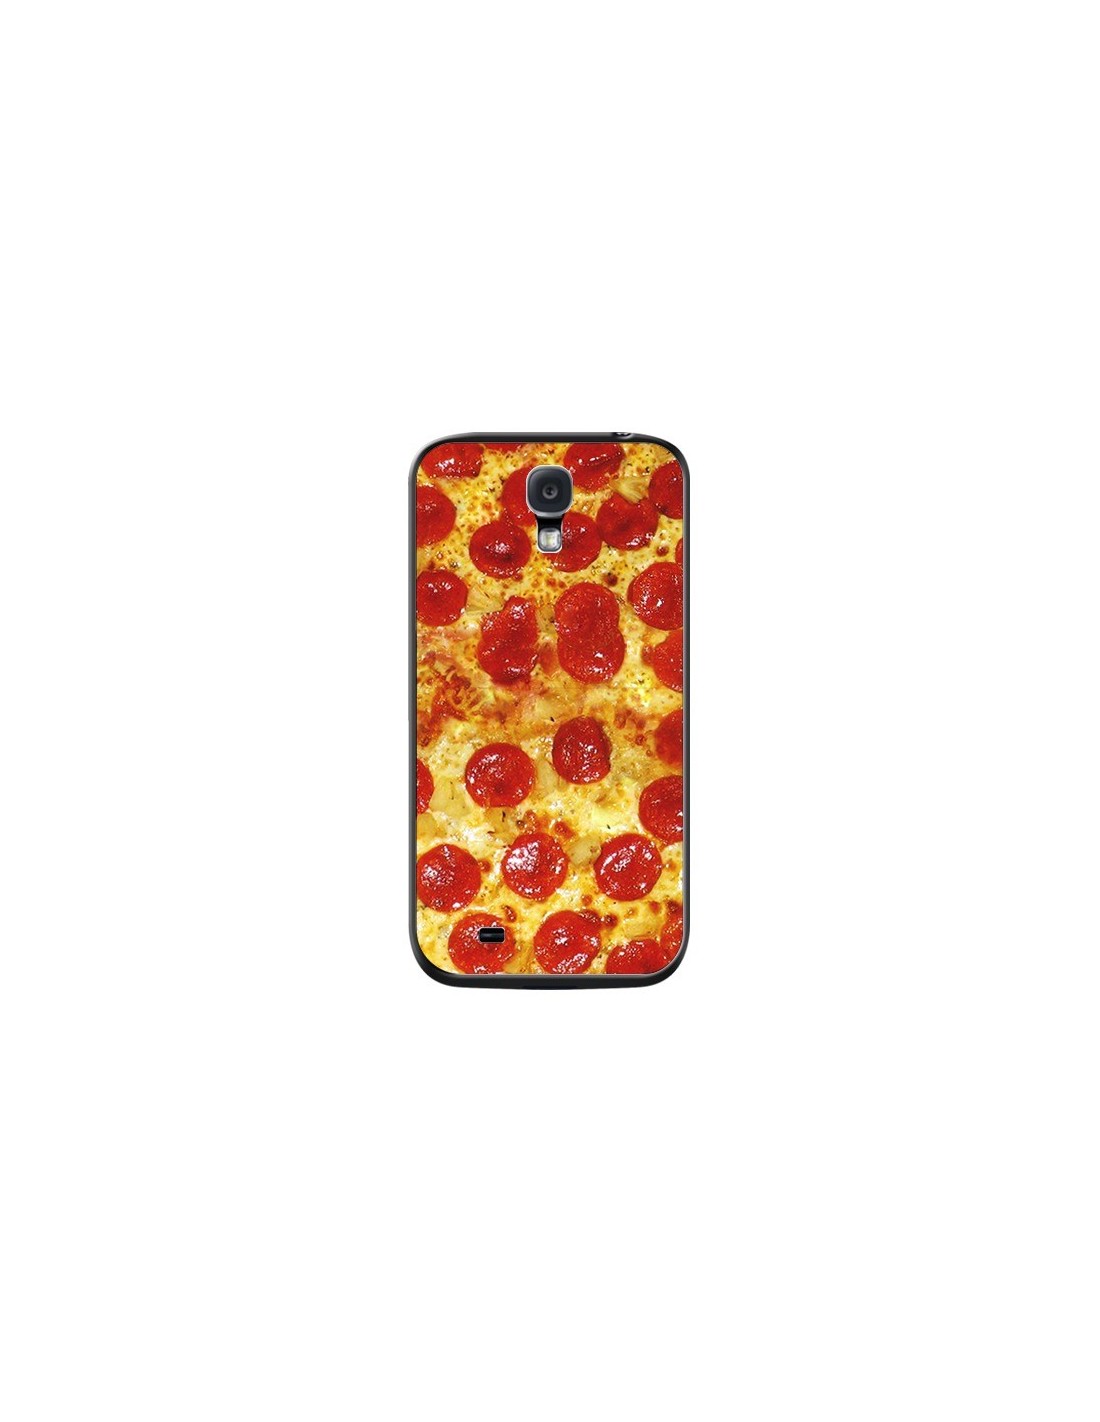 Coque Pizza Pepperoni pour Samsung Galaxy S4 Rex Lambo